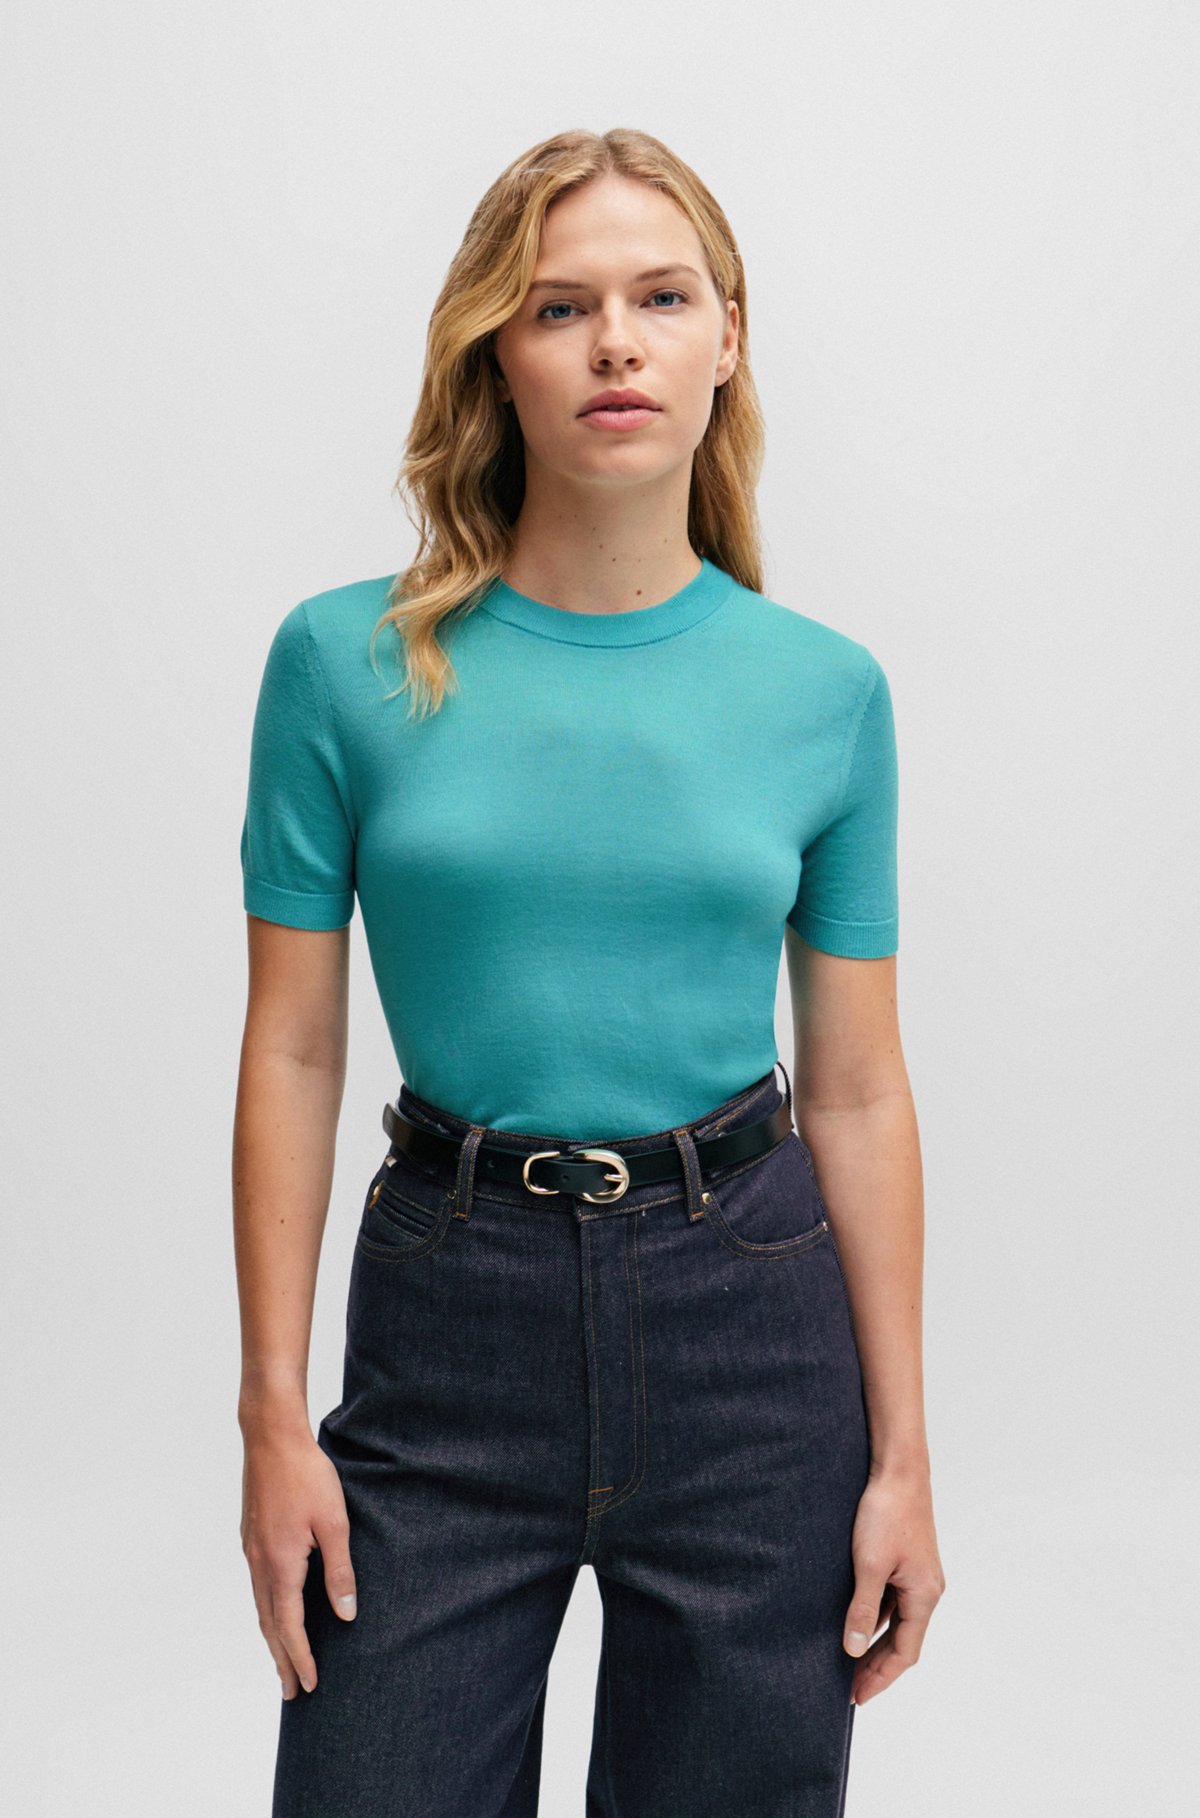 Short-sleeved sweater in Merino wool, Turquoise